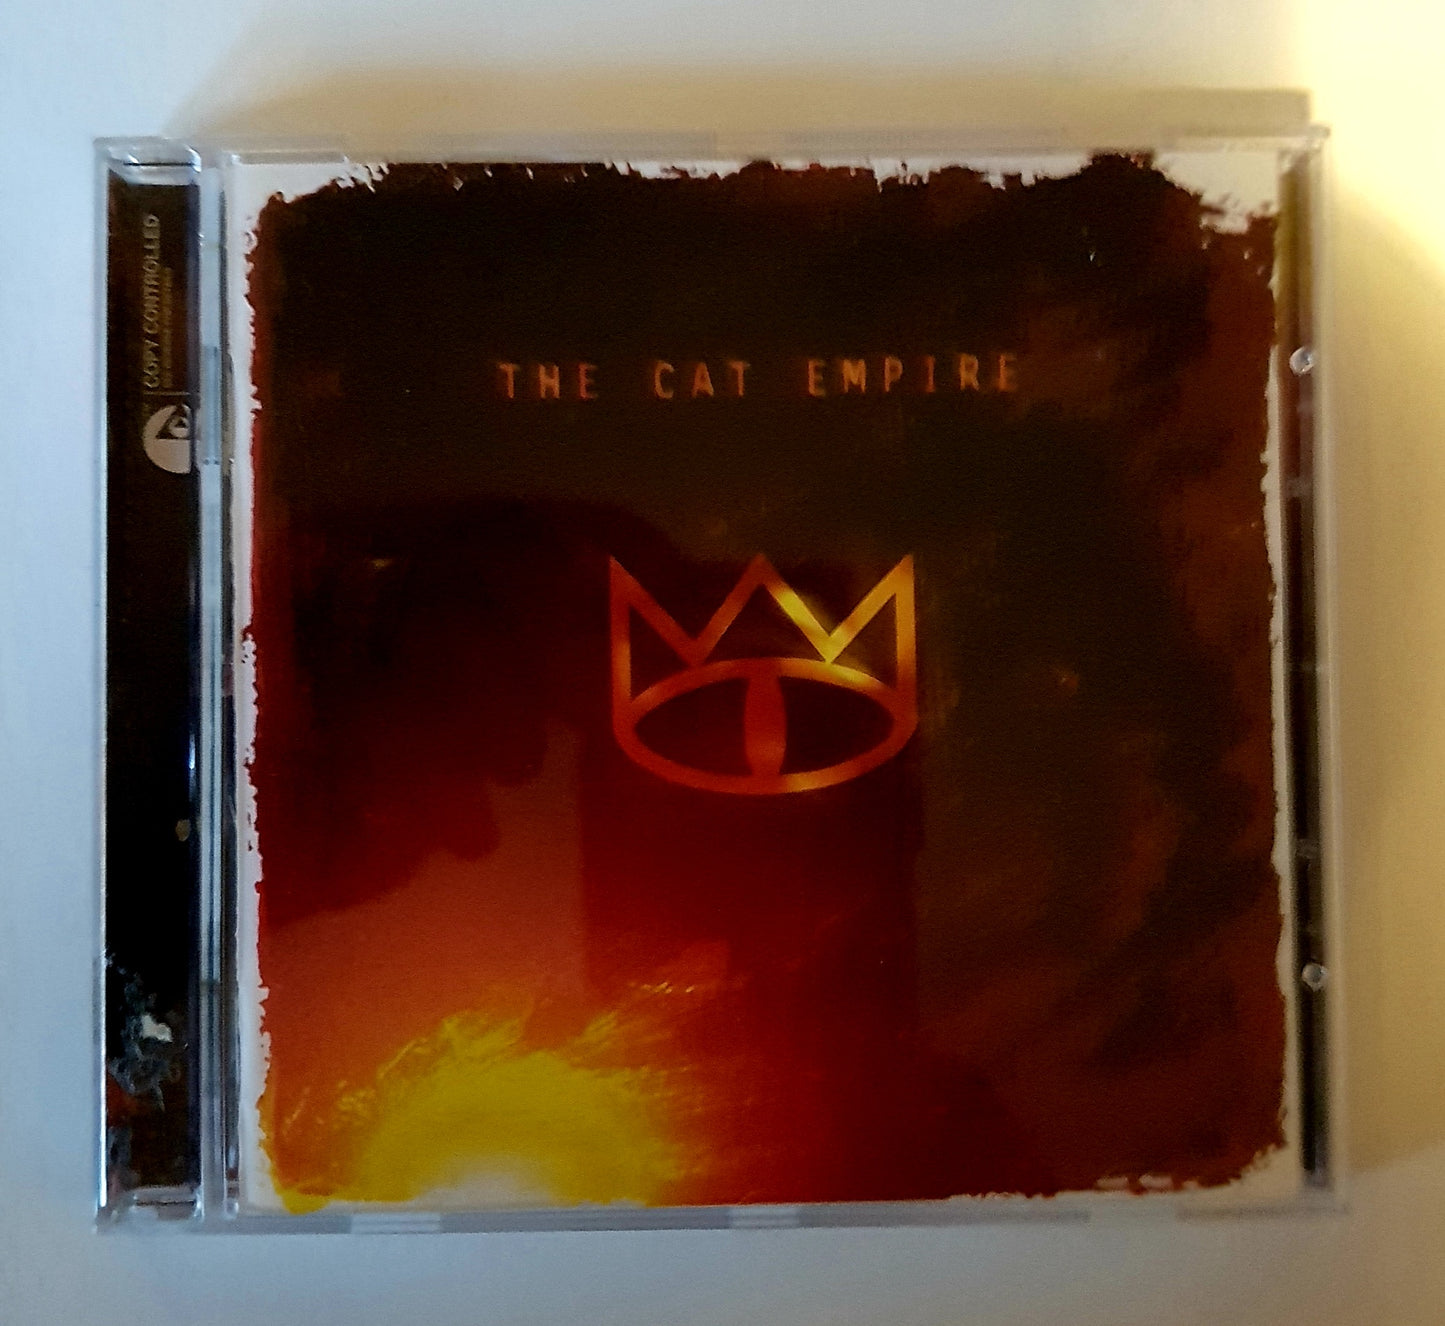 The Cat Empire, The Cat Empire (1CD)